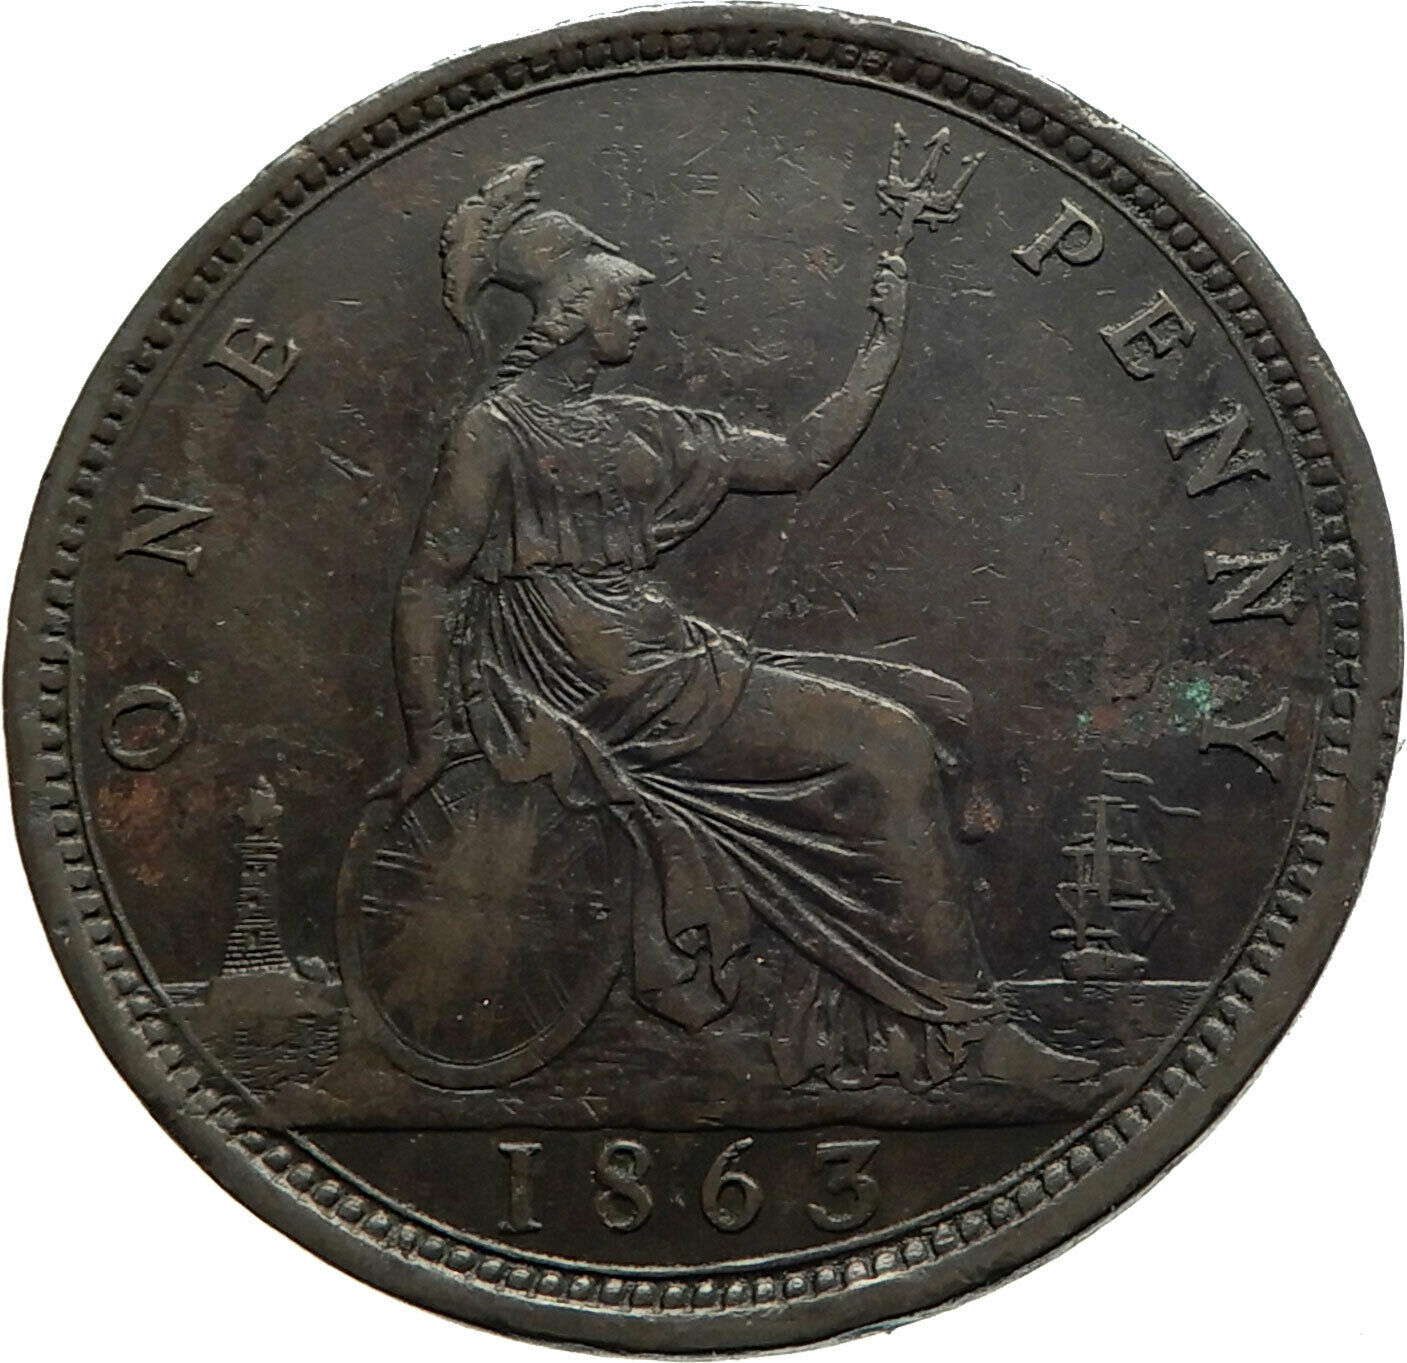 1863 UK Great Britain United Kingdom QUEEN VICTORIA Genuine Penny Coin i76766